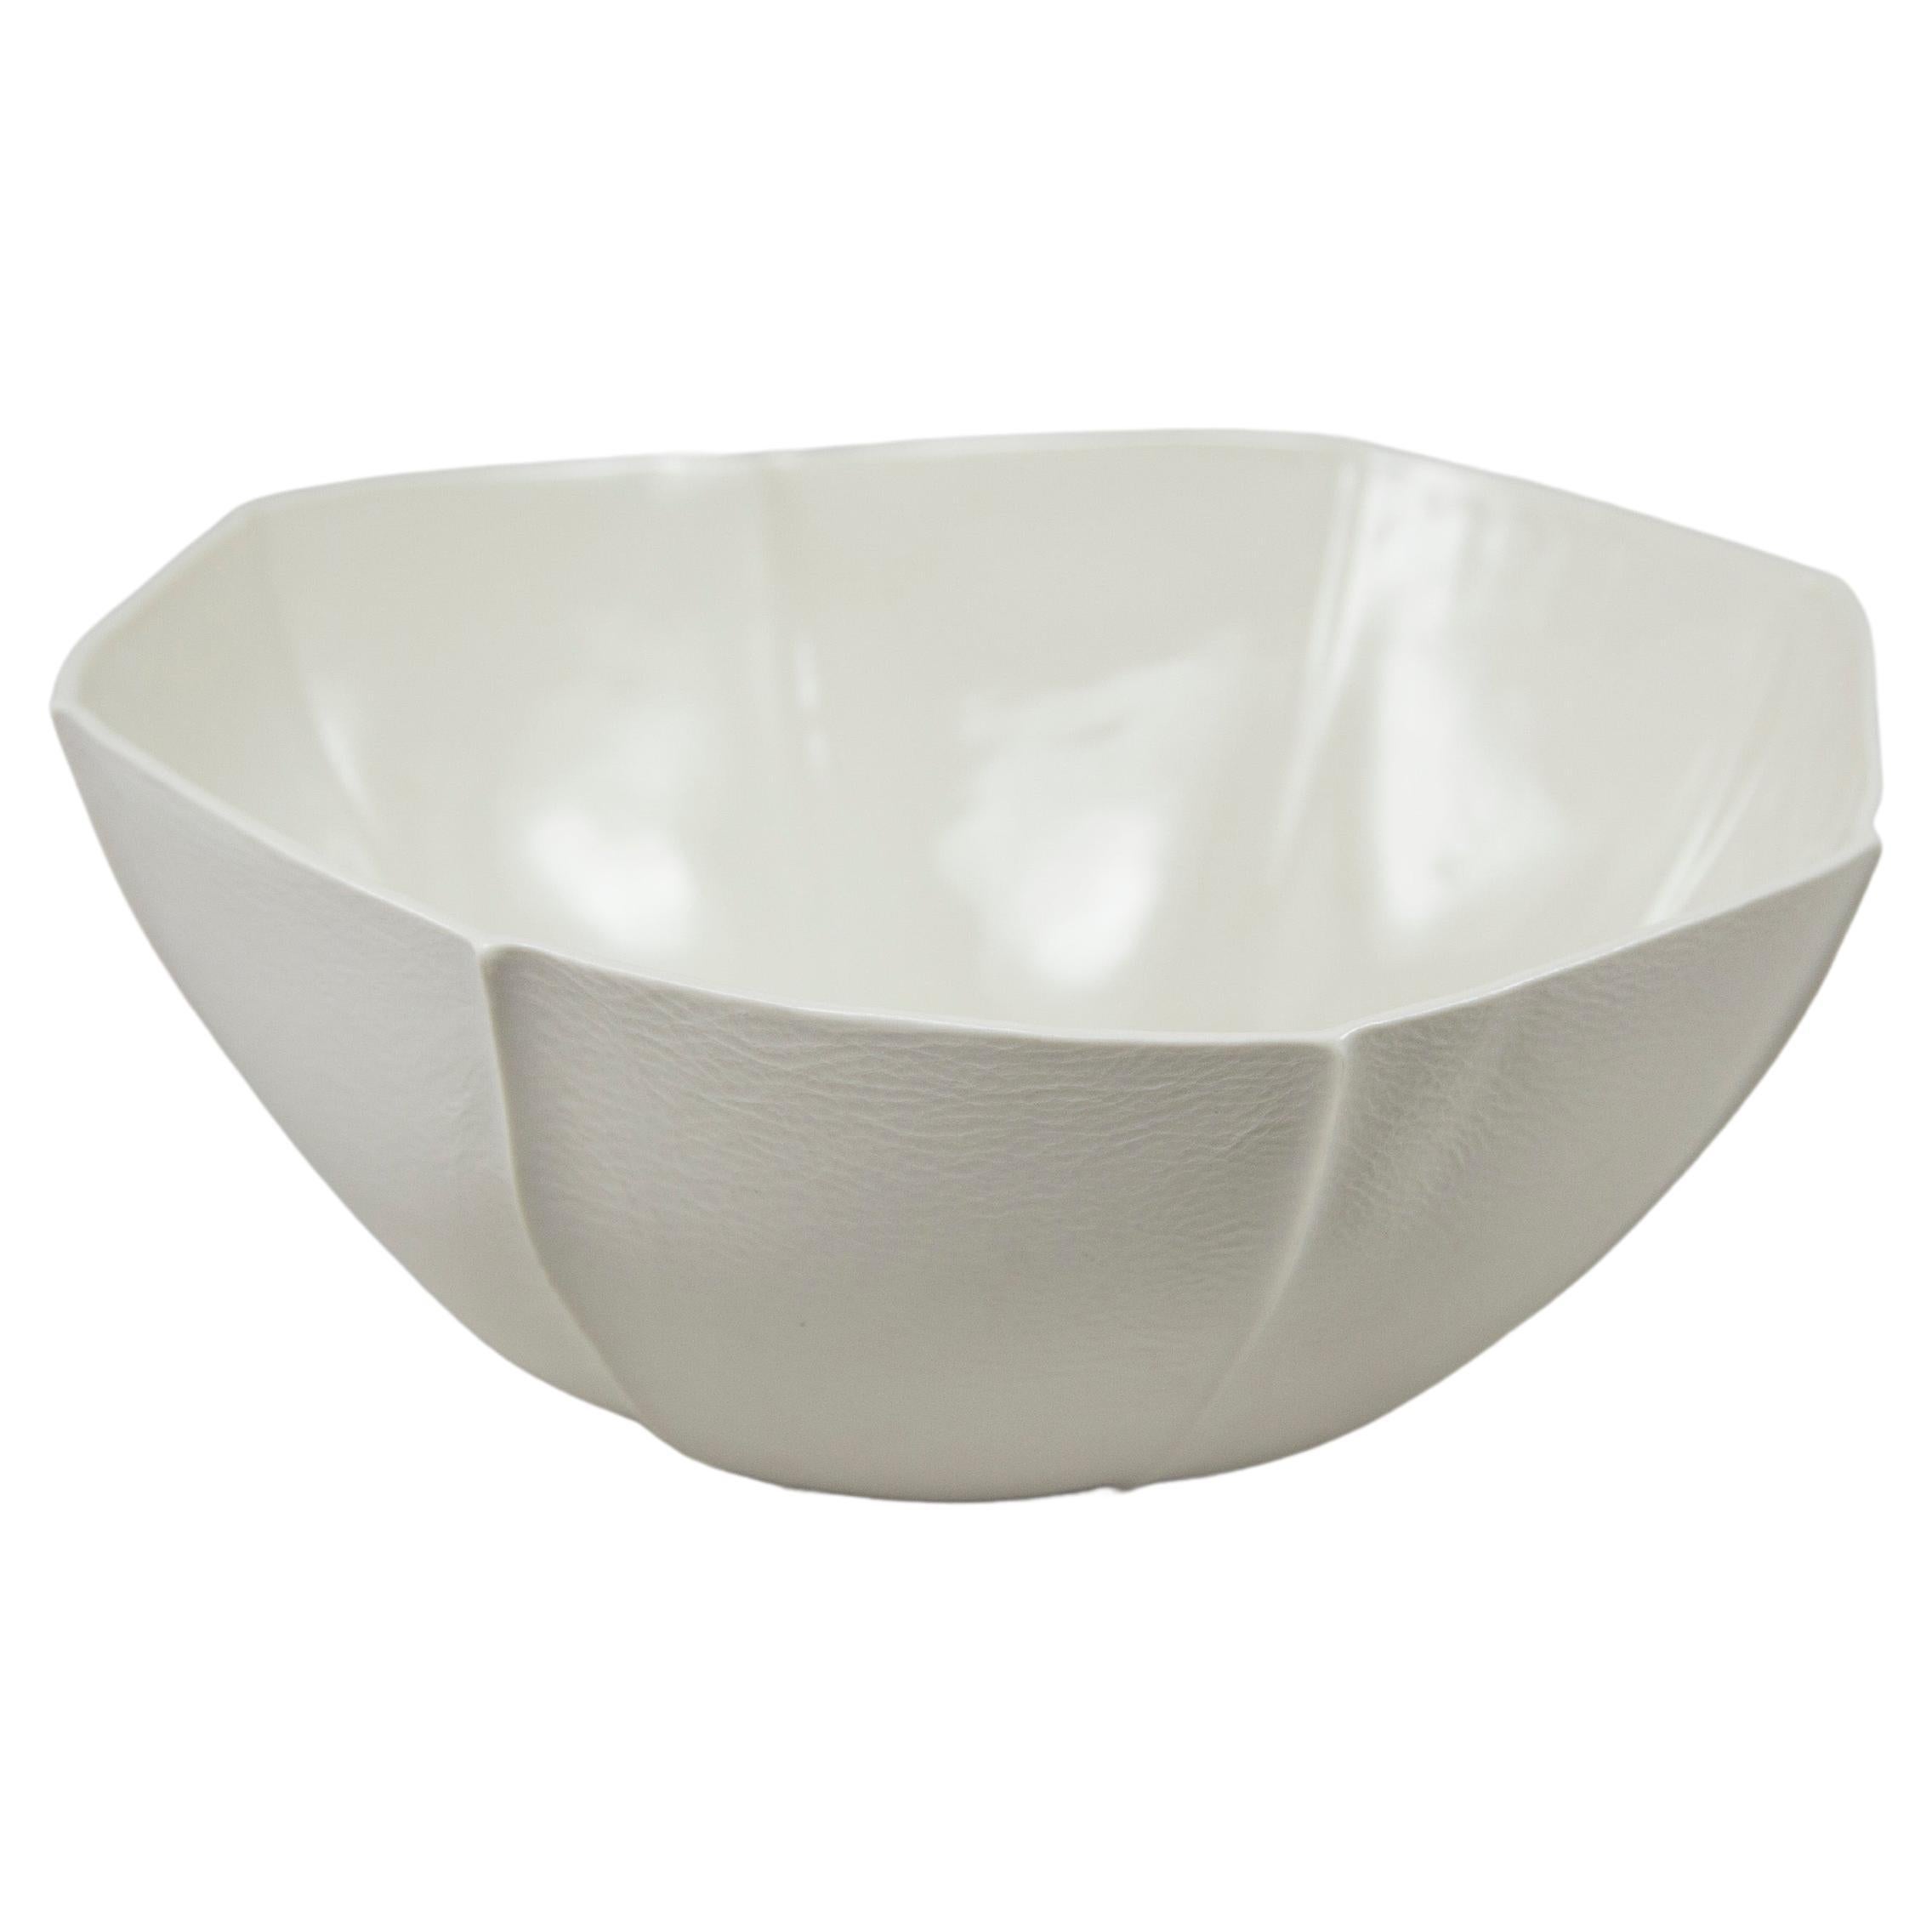 Grand bol Kawa en porcelaine organique blanche, centre de table en céramique texturée 